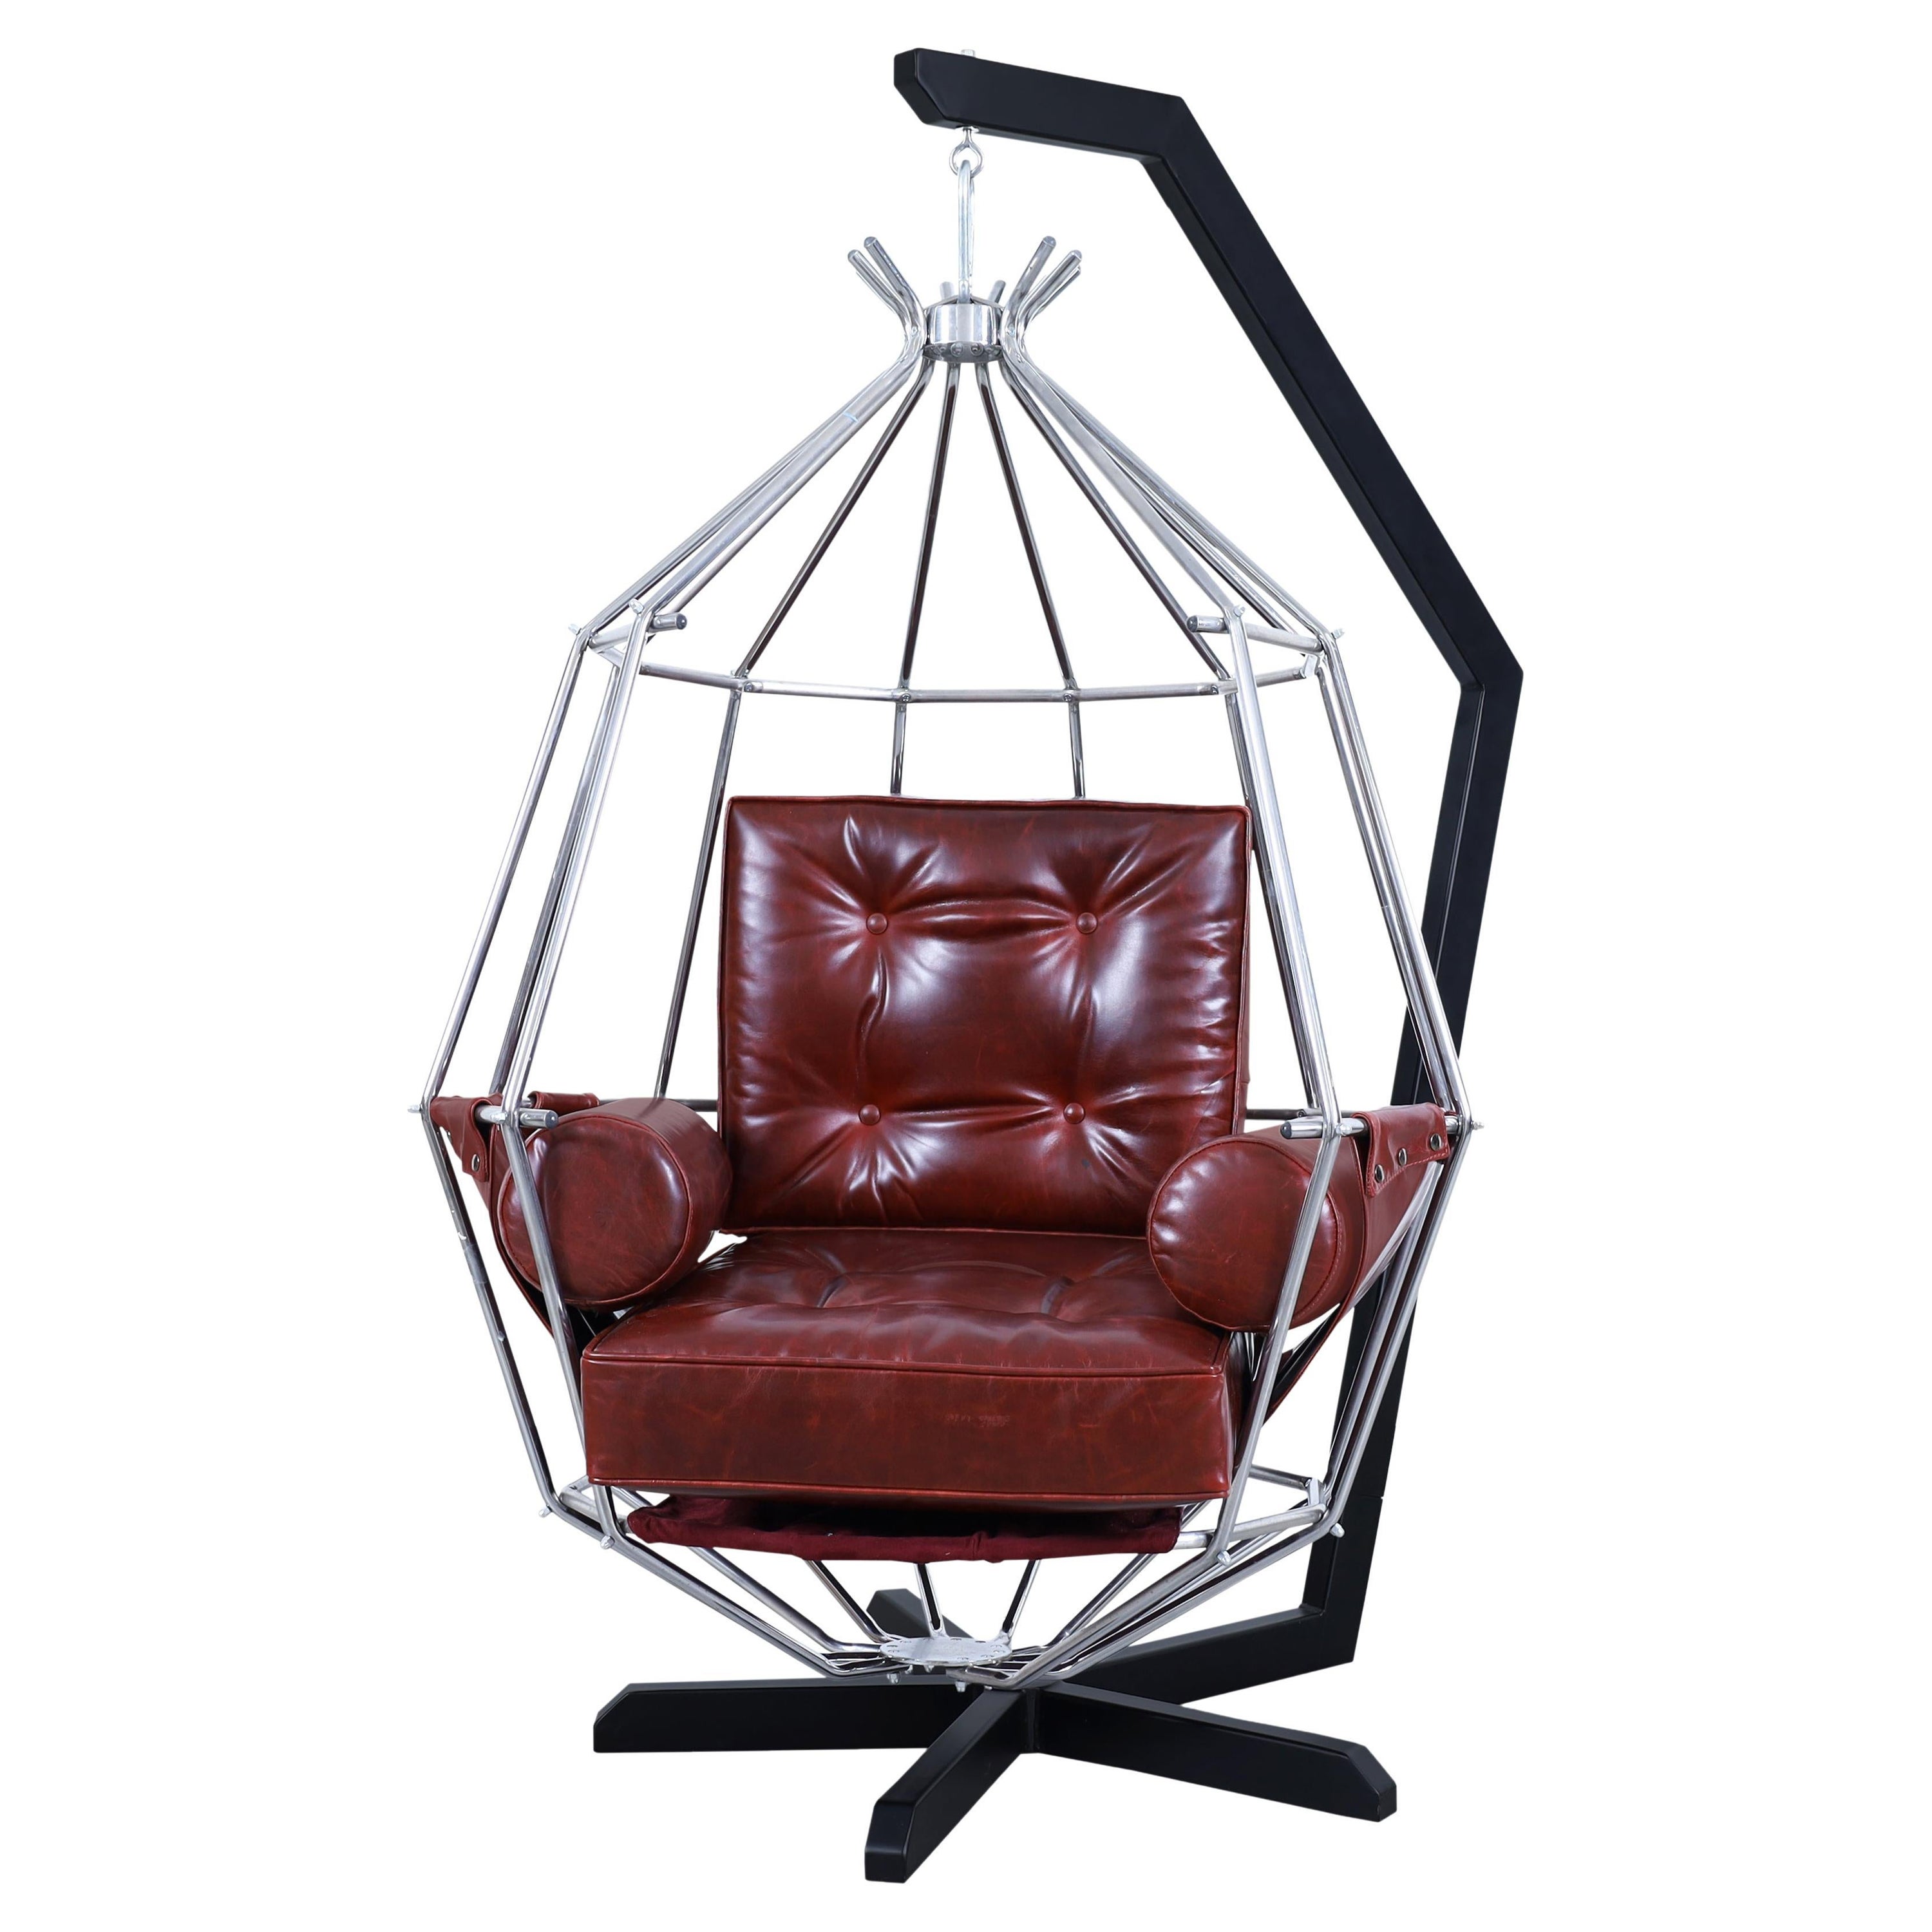 Chaise pivotante suédoise en cuir « Perrot Cage » d'Ib Arberg